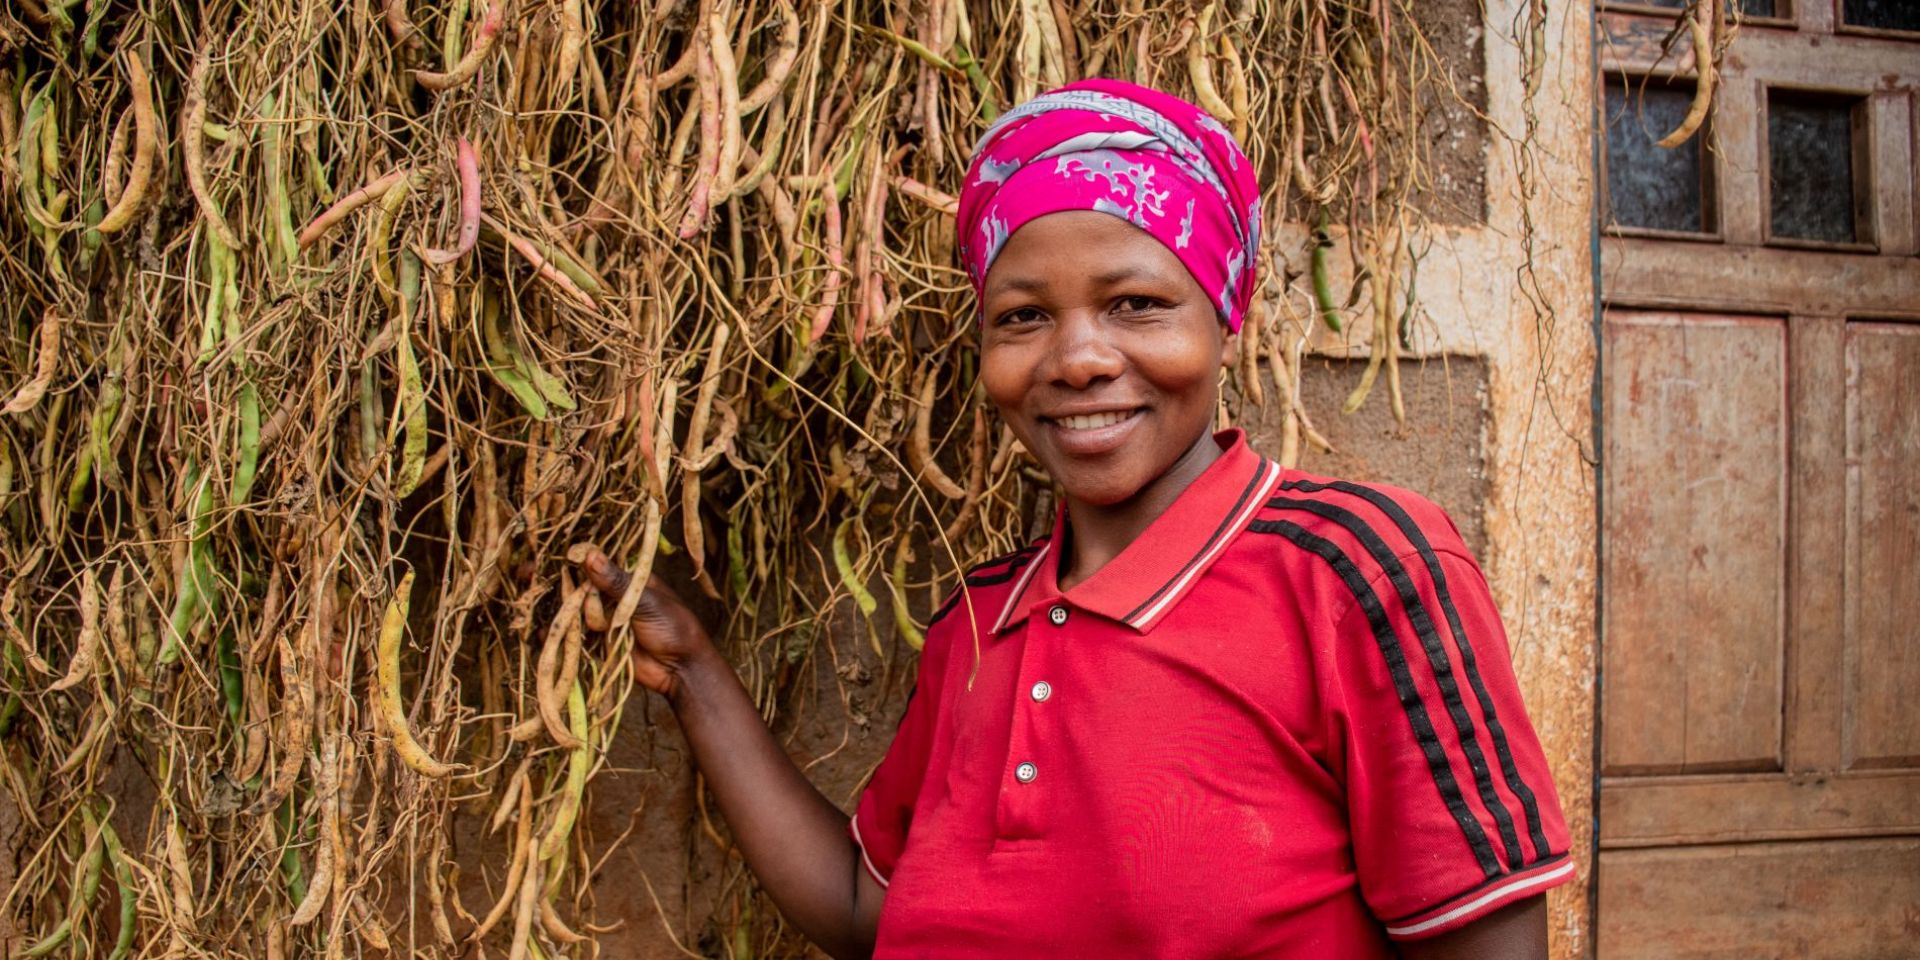 A smiling smallholder farmer showing her bean harvest